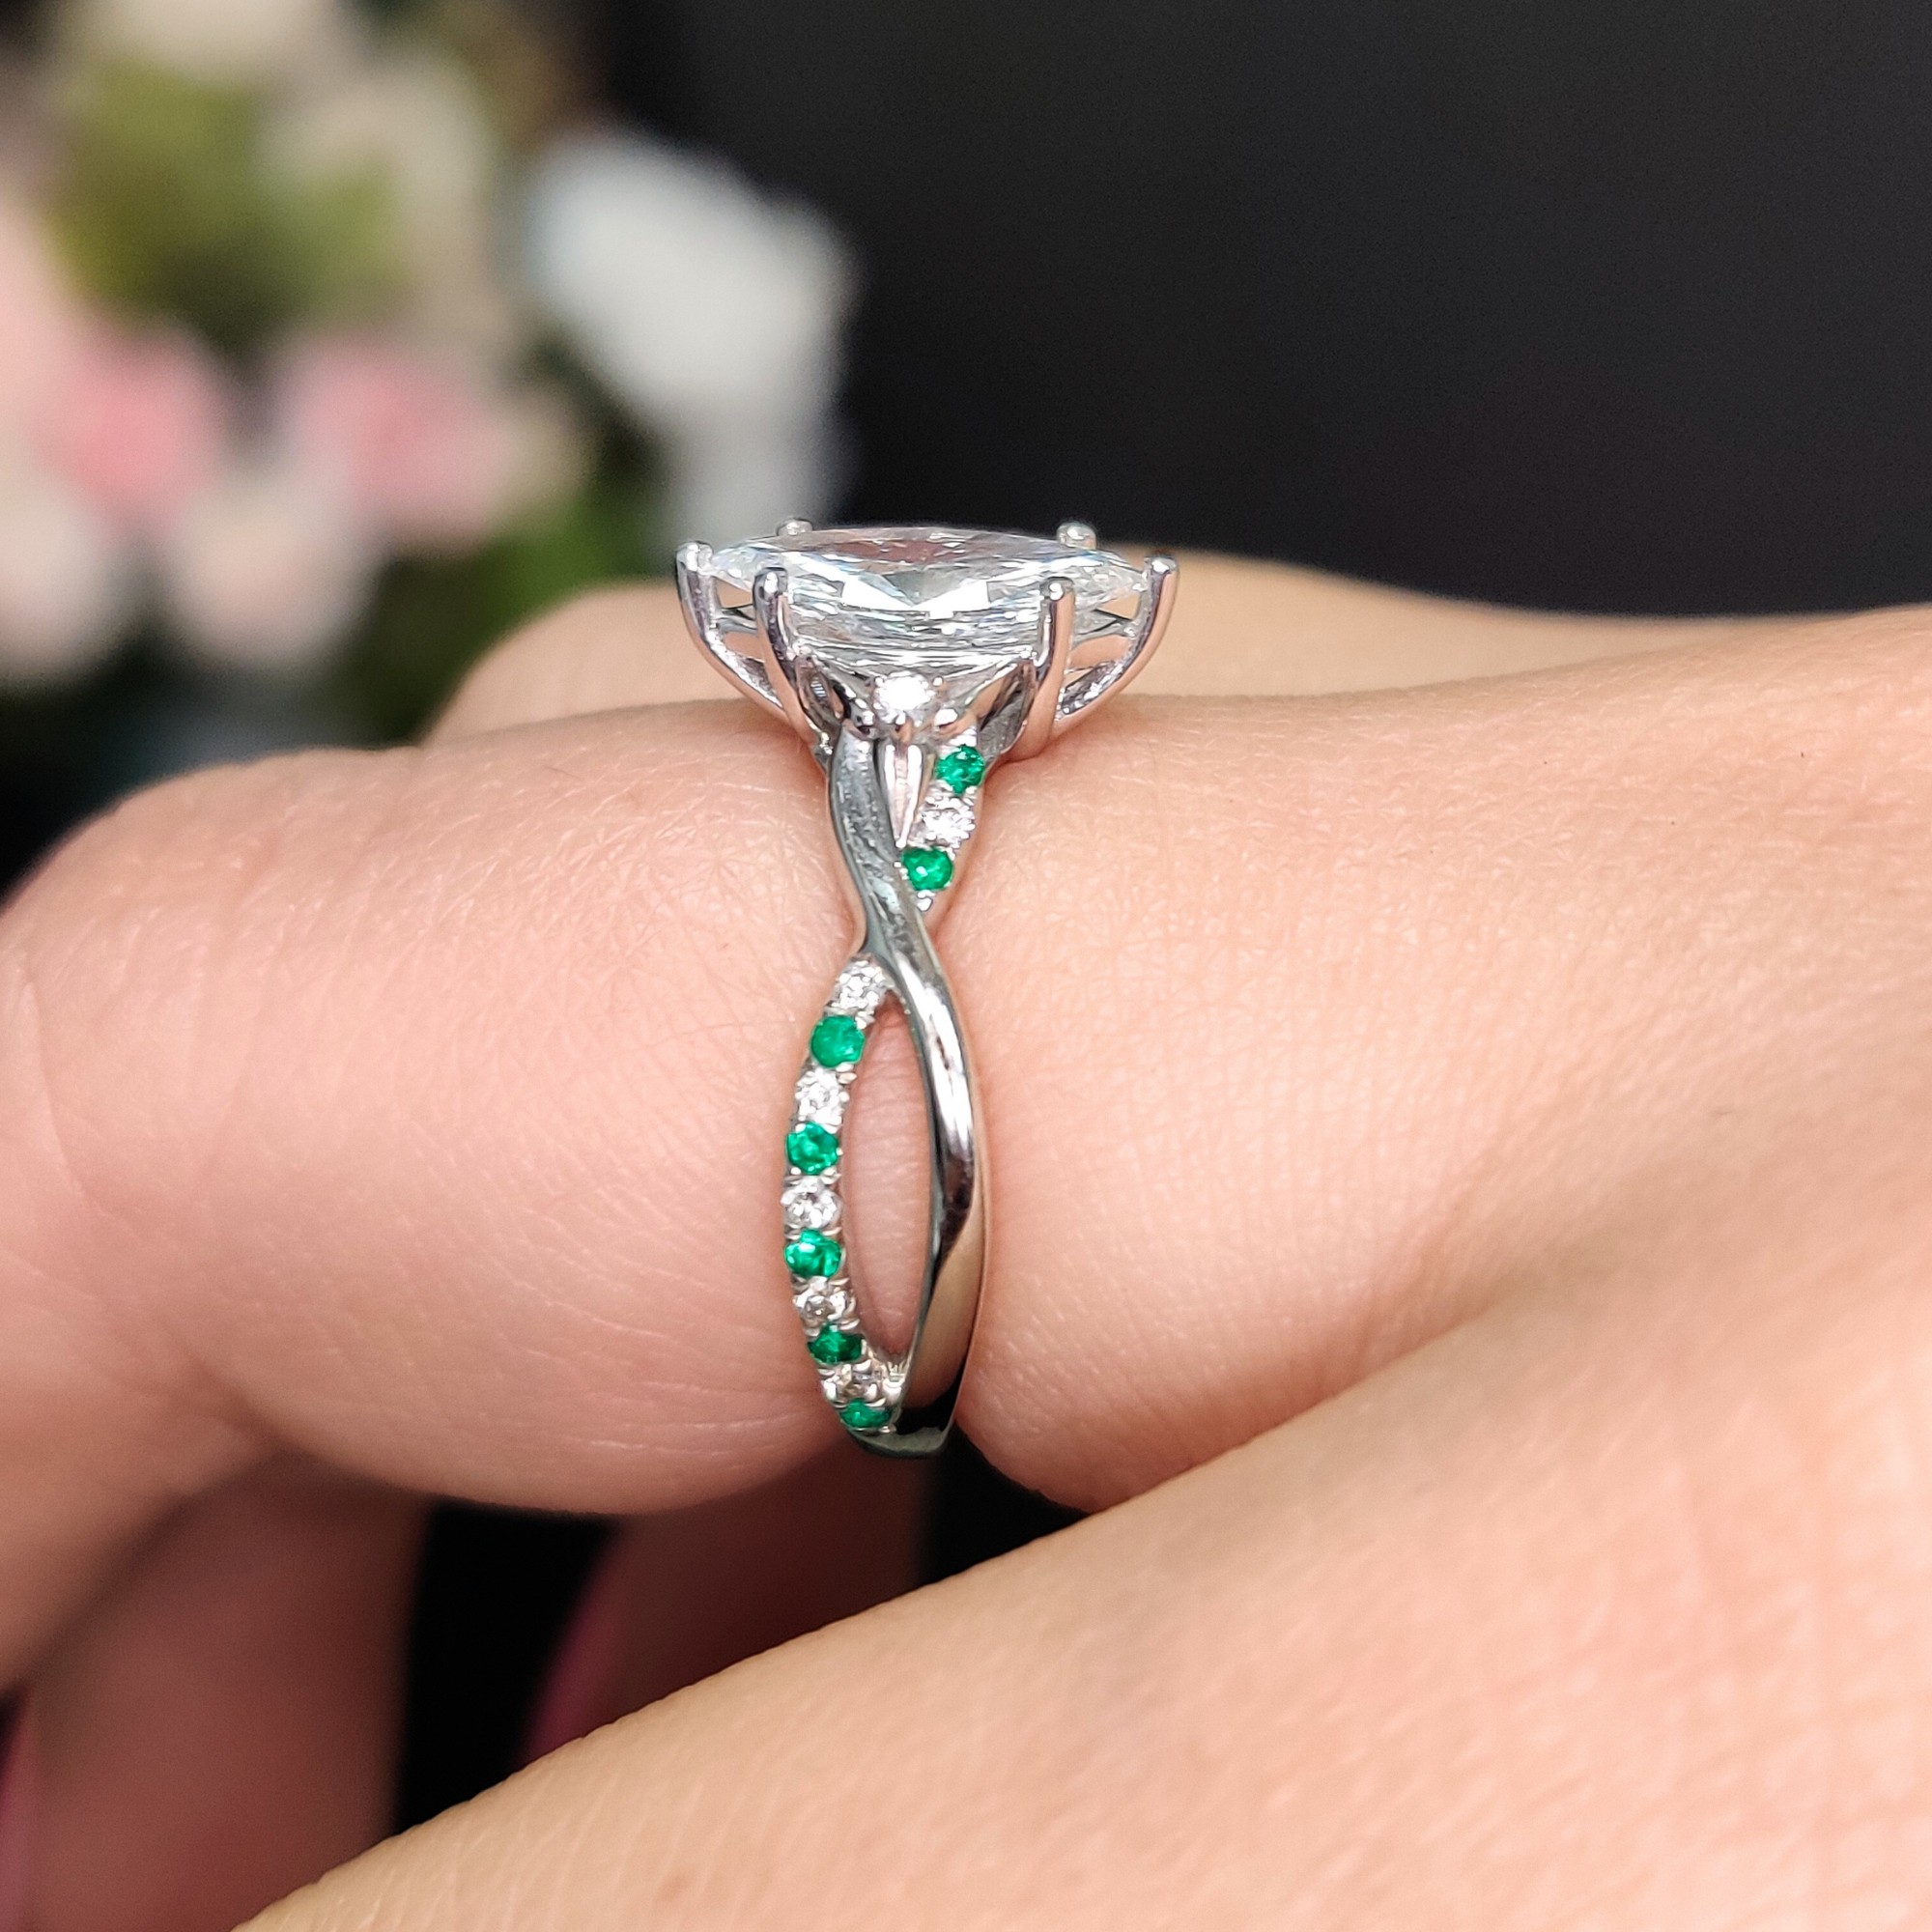 Infinity Daisy Floral Diamond Ring